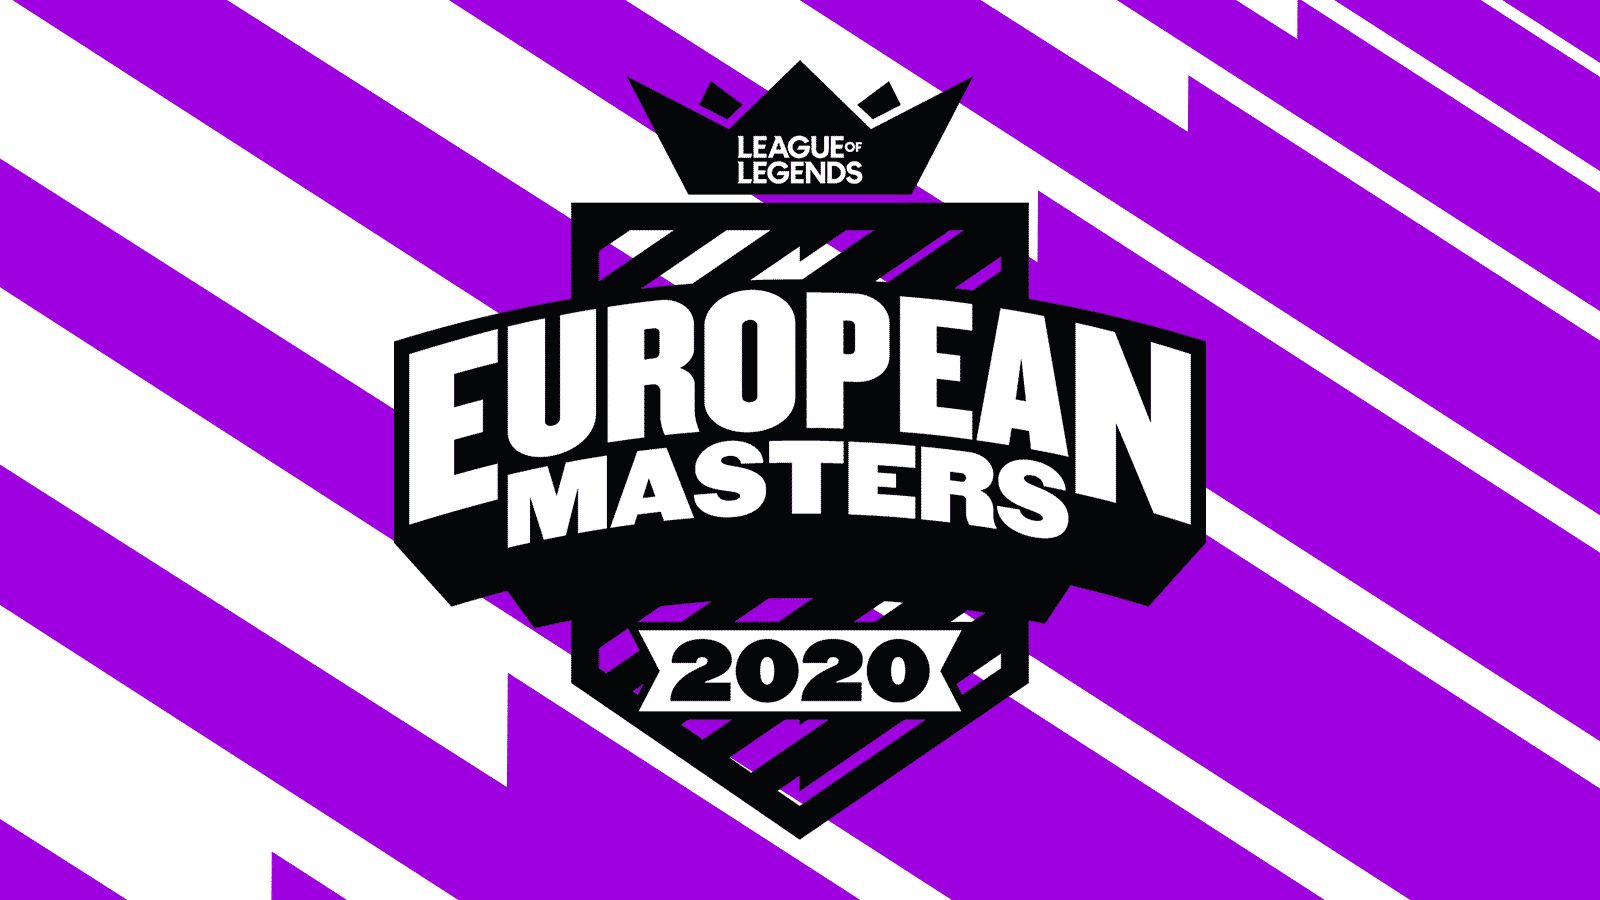 European masters 2020 header